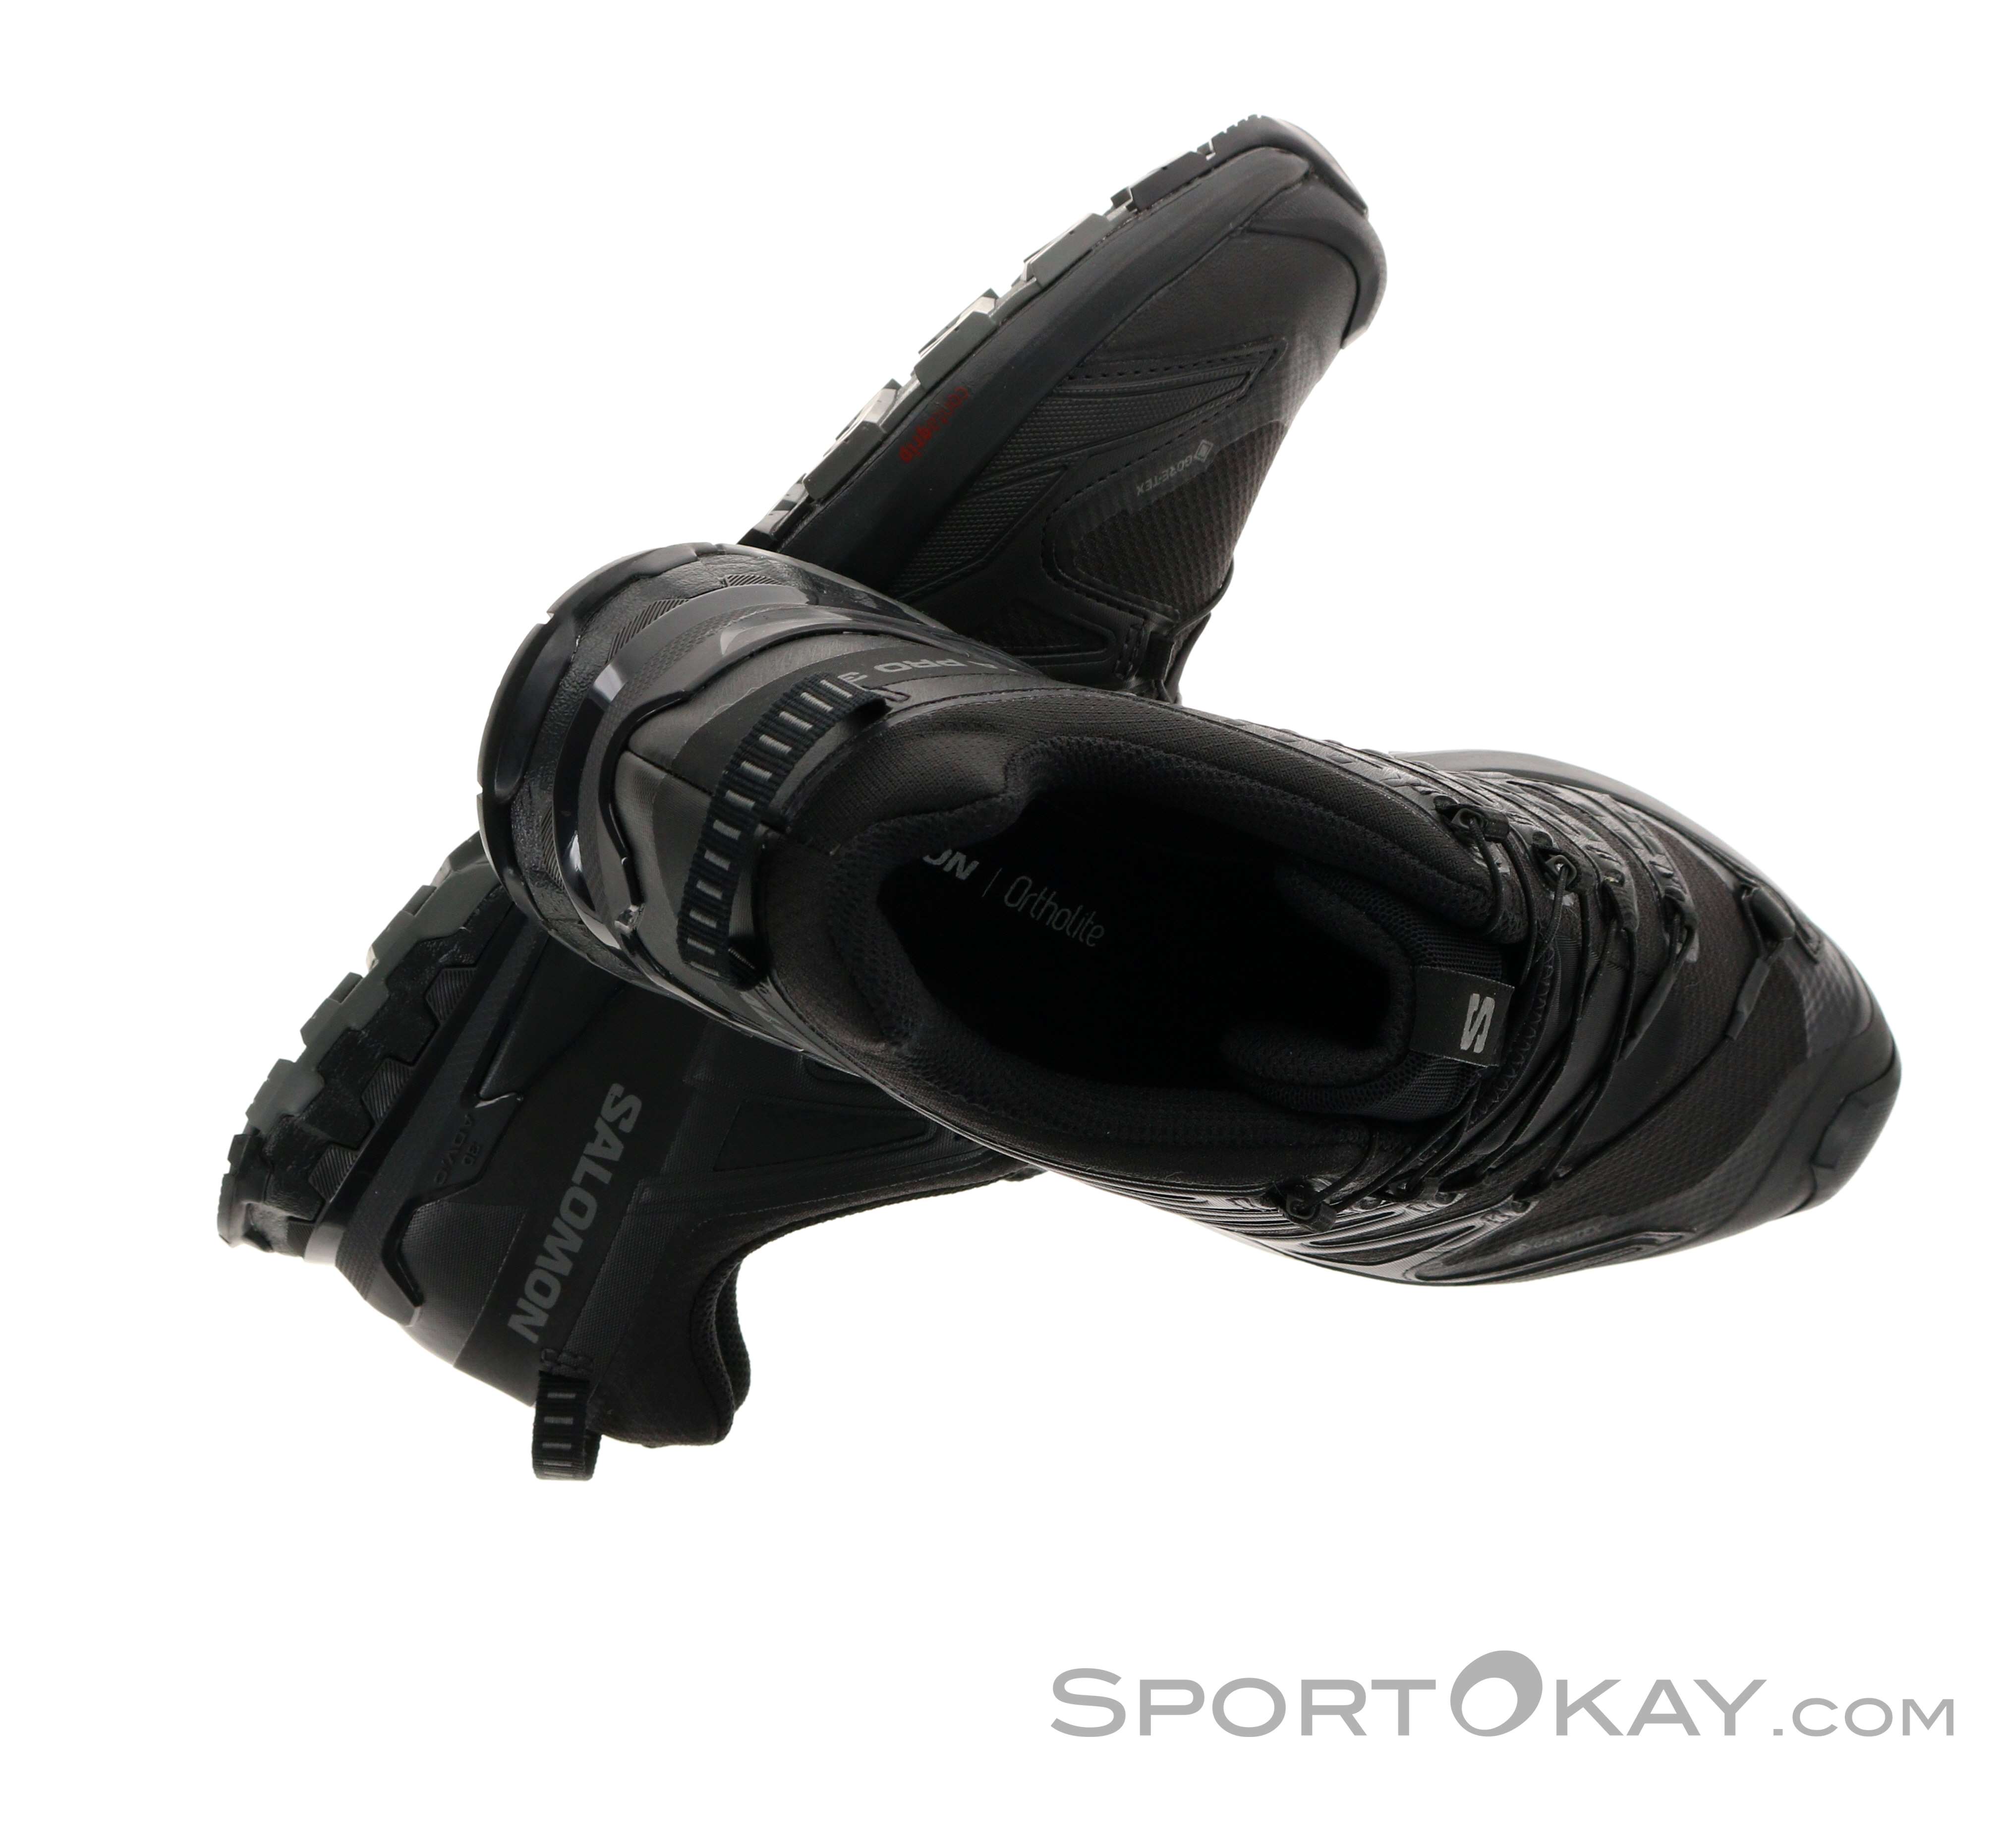 Salomon XA Pro 3D V9 Wide GTX - Multisport shoes Men's, Free EU Delivery